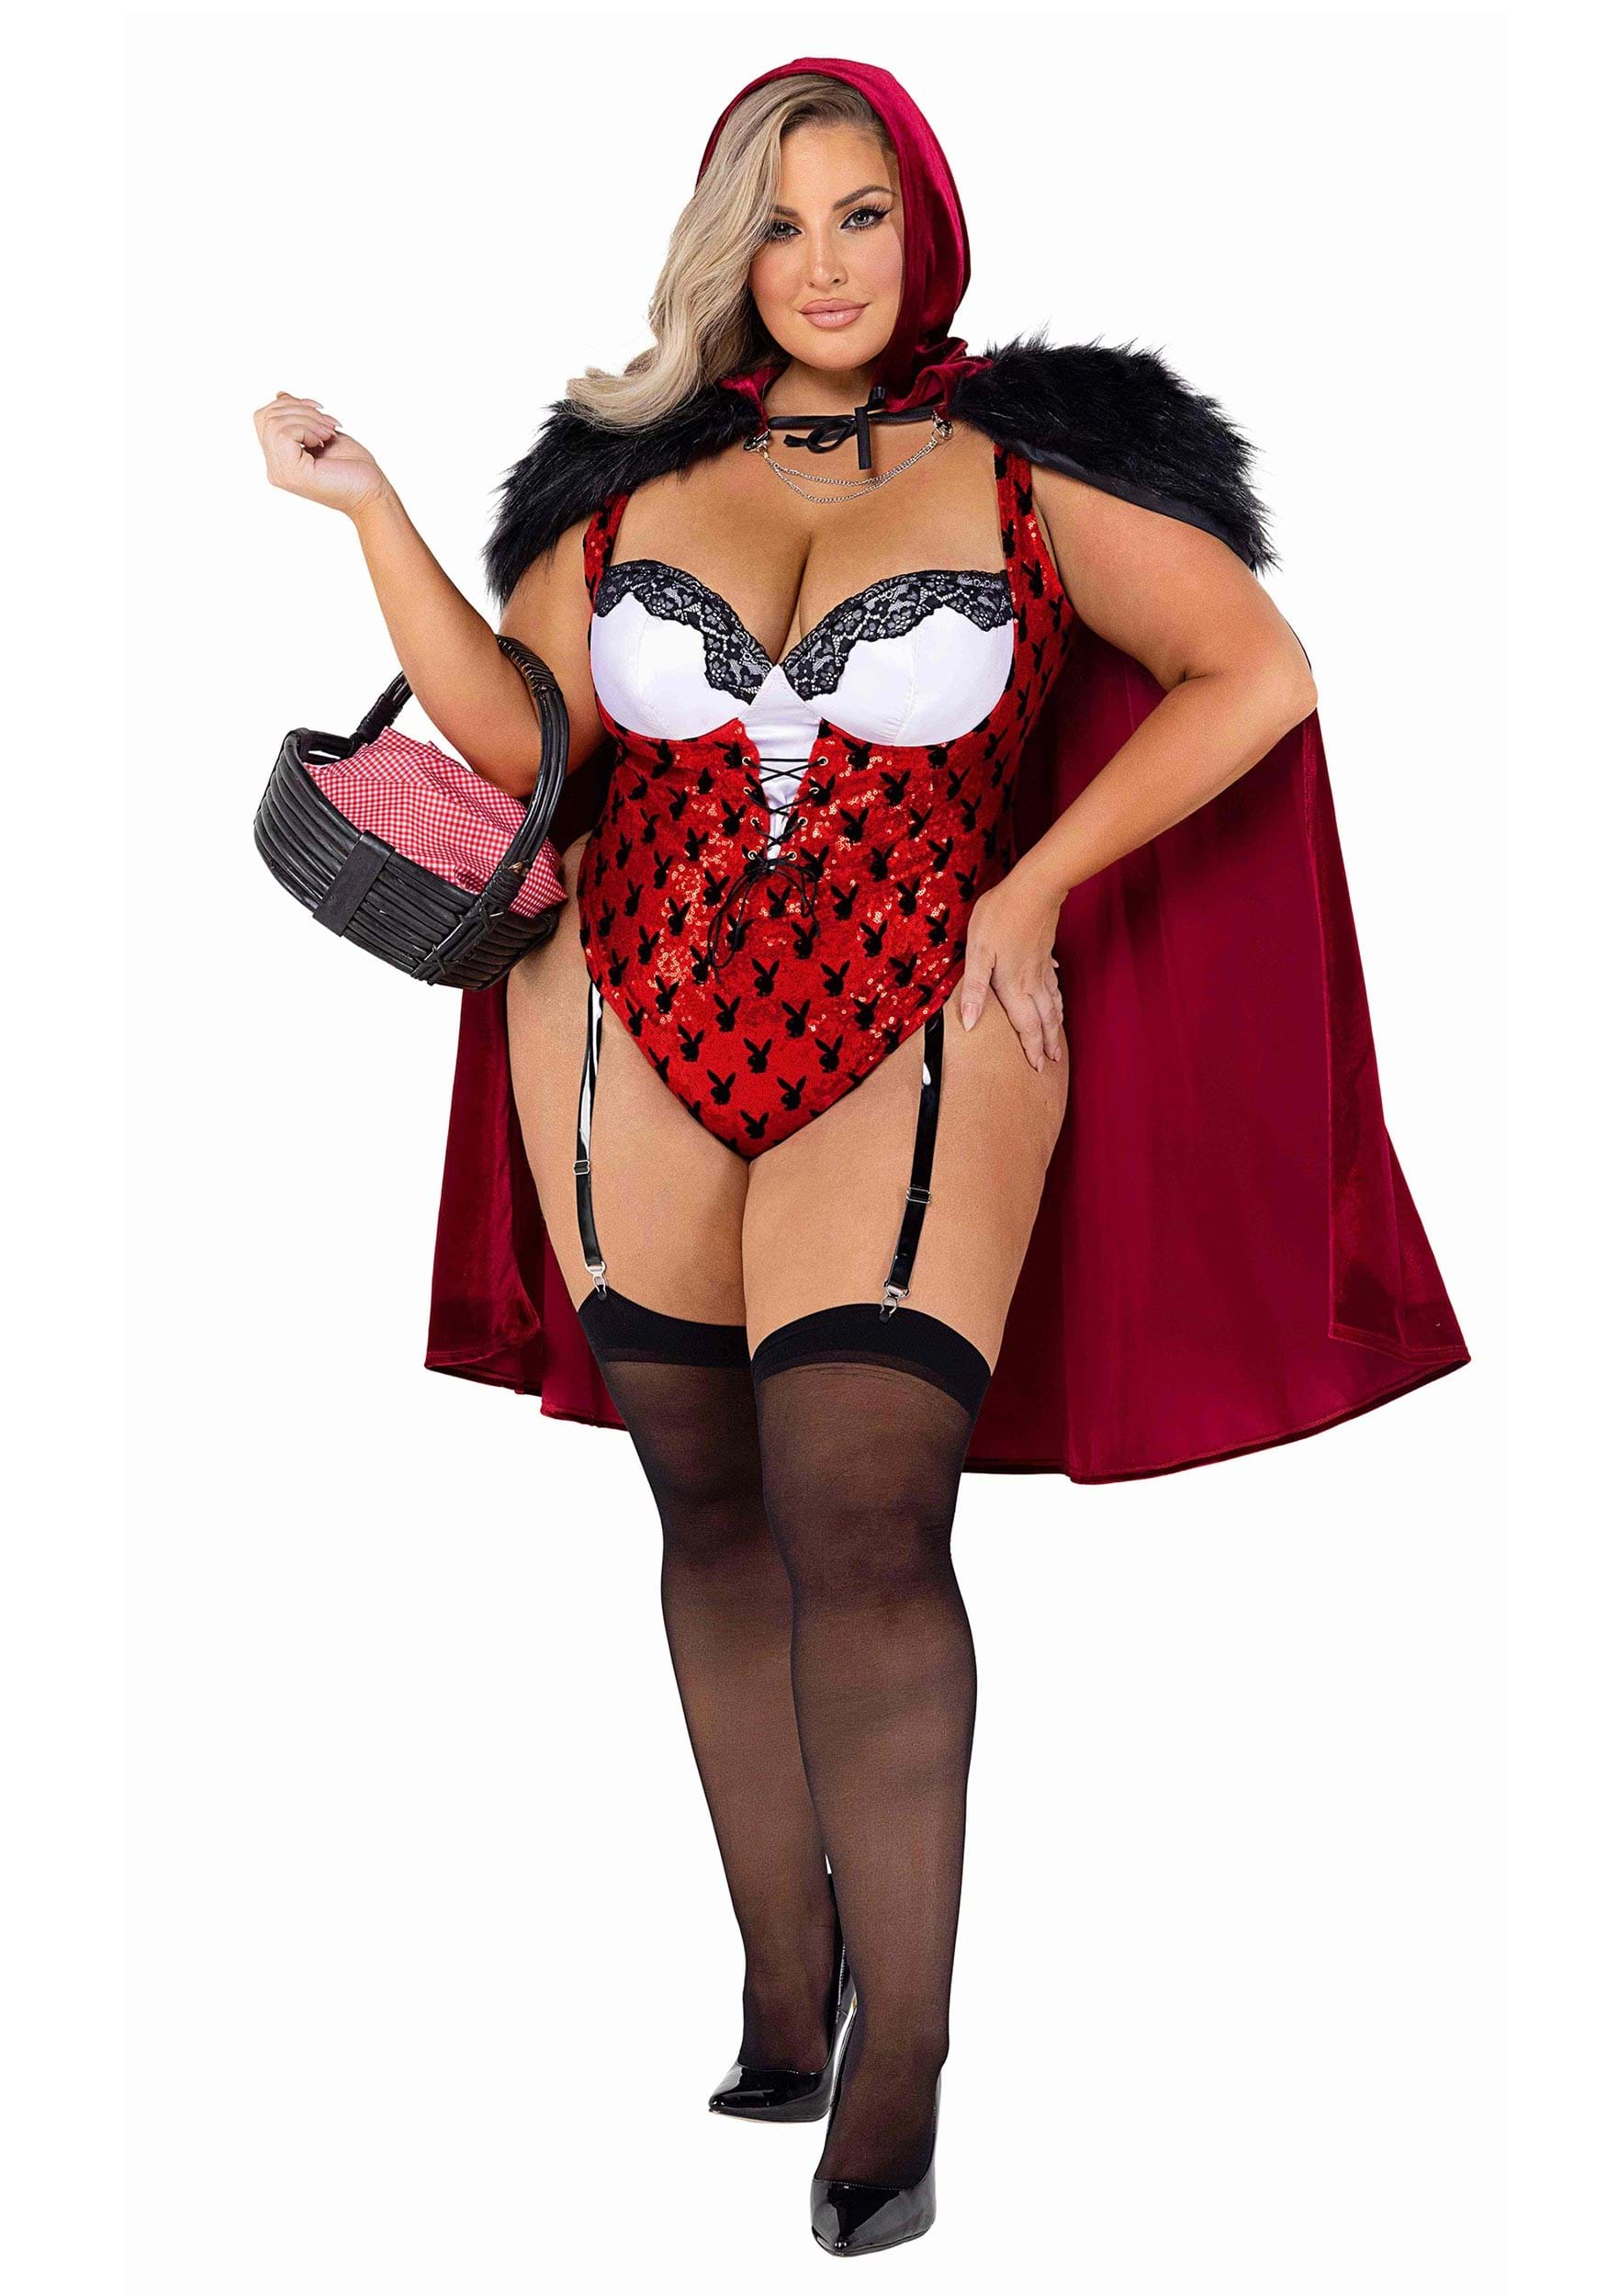 Photos - Fancy Dress Roma Plus Size Women's Playboy Red Riding Hood Costume Black/Red ROPB1 